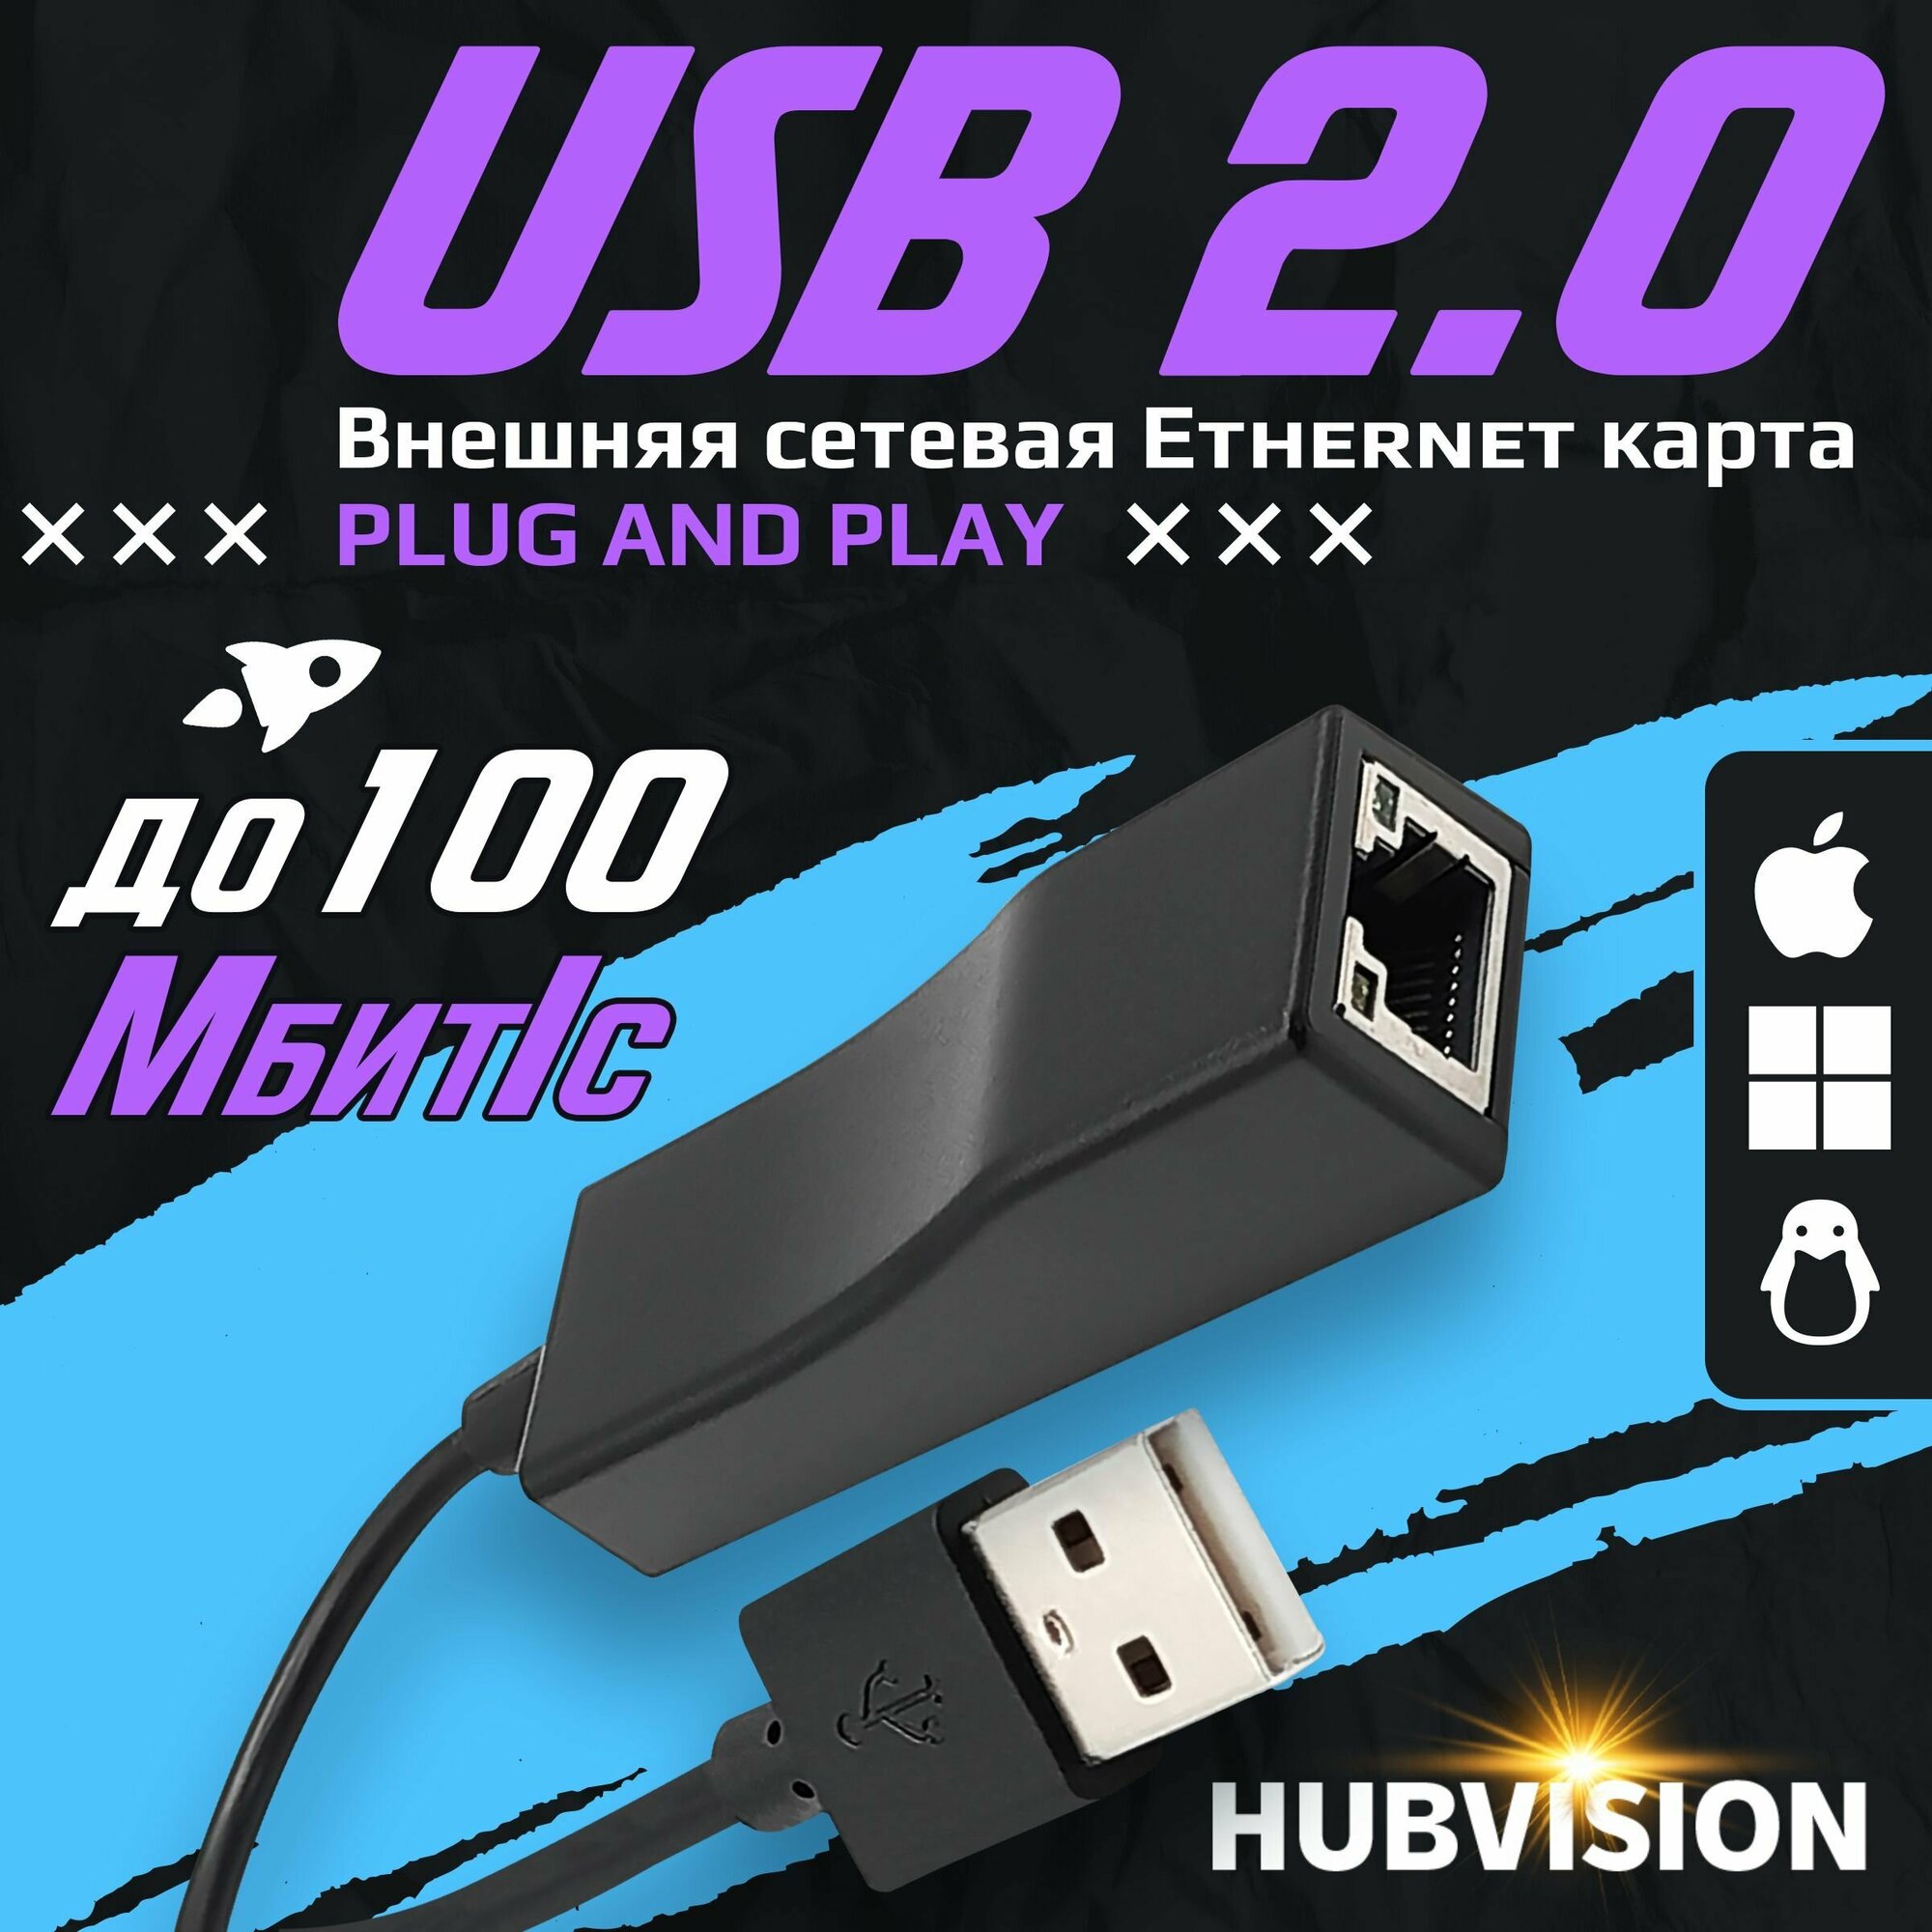 Внешняя сетевая Ethernet карта USB 2.0 - LAN (RJ45), 100 Мбит/с, адаптер - переходник для пк, ноутбука